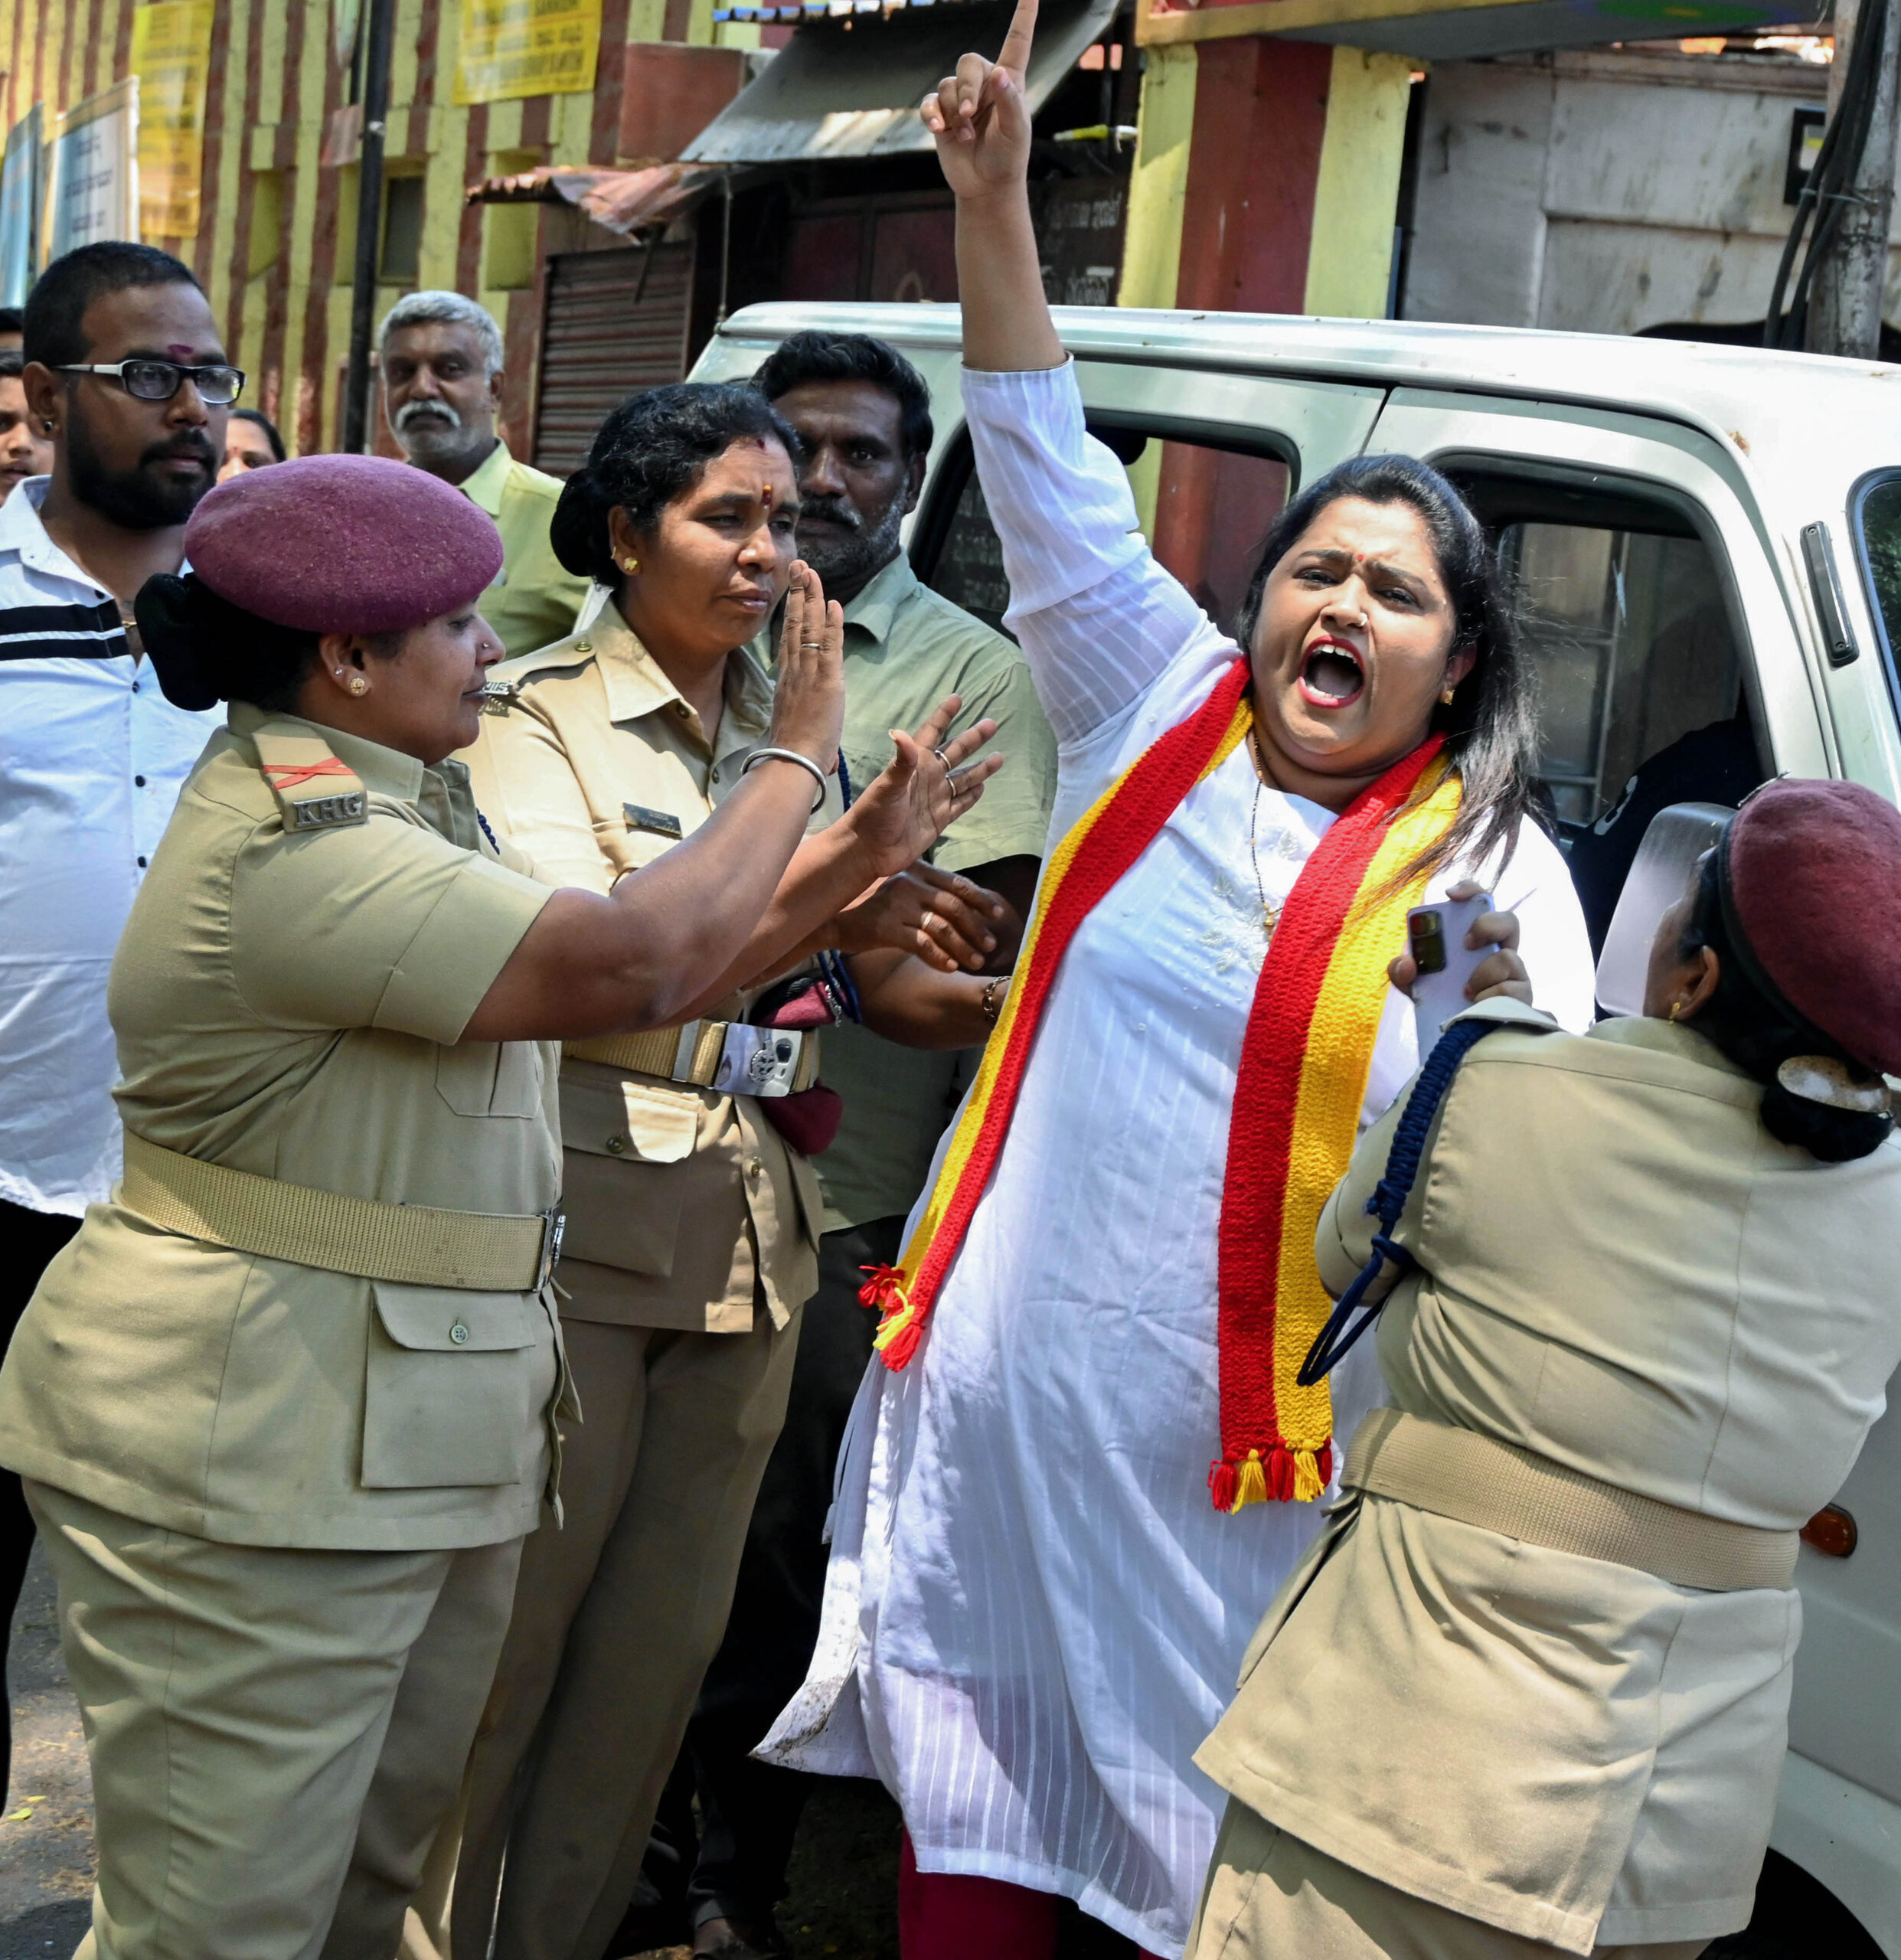 Workers from the Karnataka Rakshana Vedike protesting Amul’s entry were detained